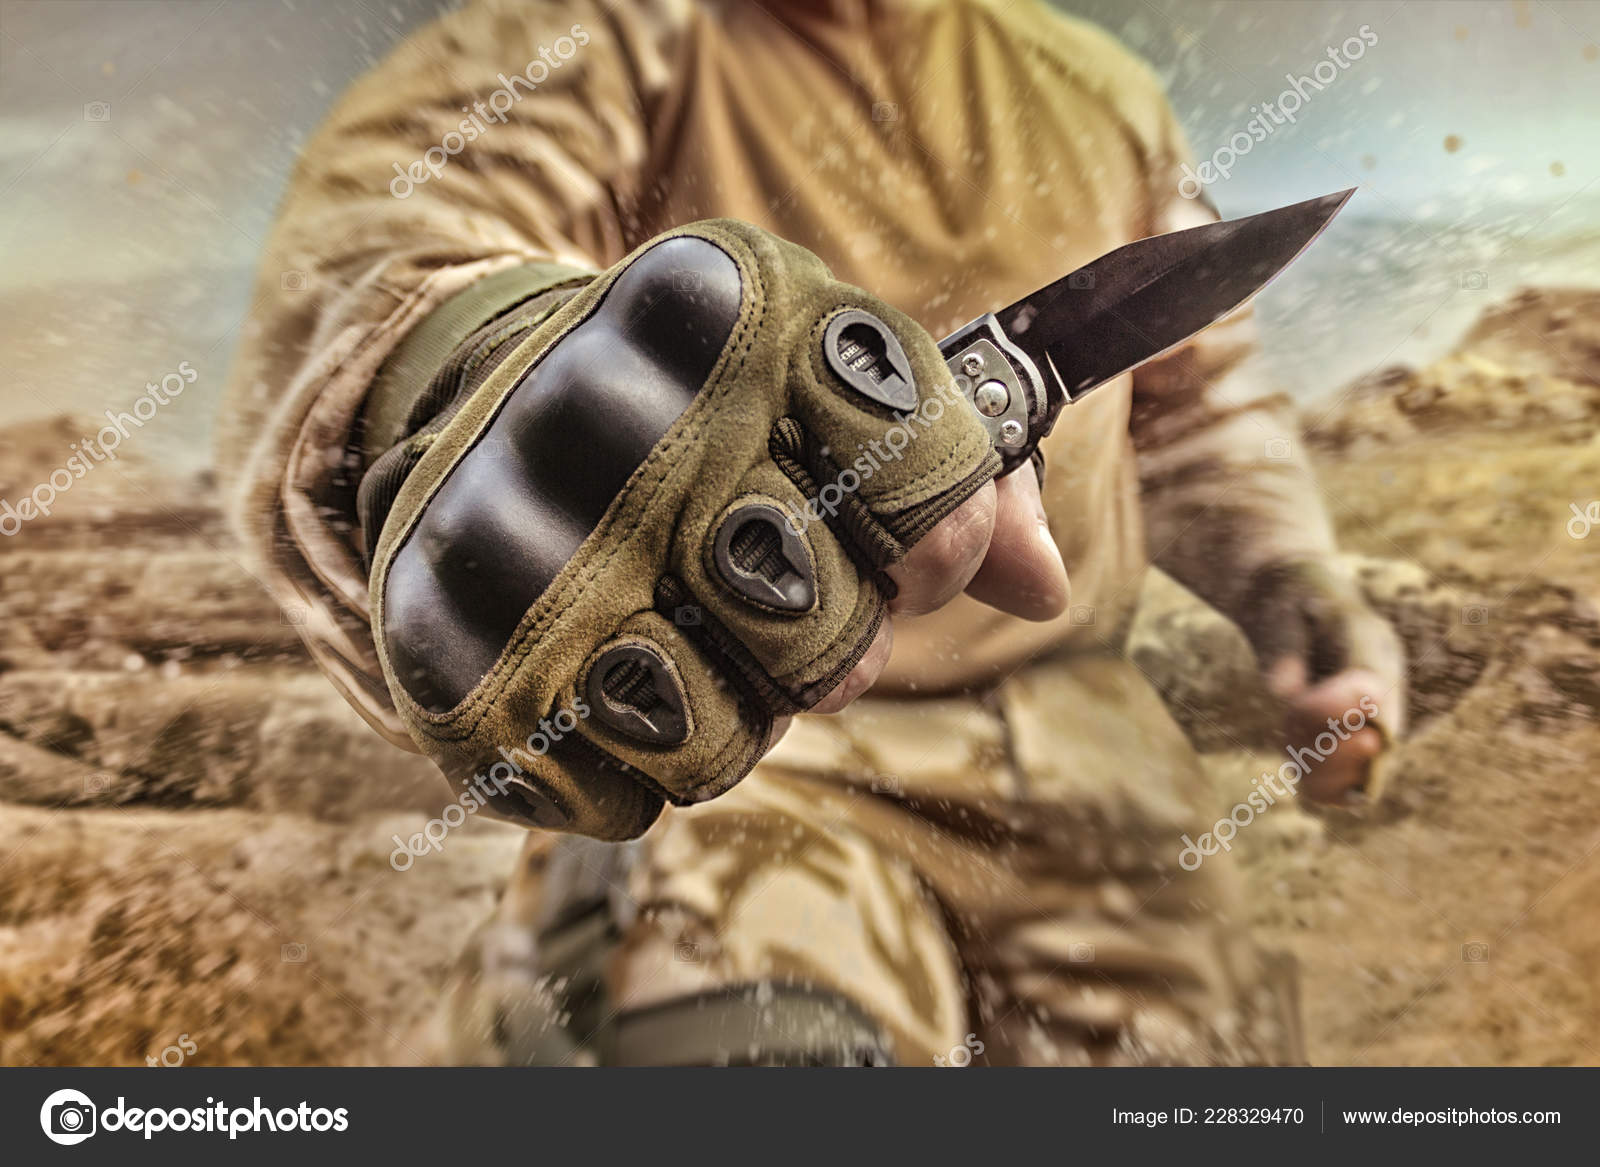 https://st4.depositphotos.com/3335611/22832/i/1600/depositphotos_228329470-stock-photo-photo-military-equipped-soldier-posing.jpg